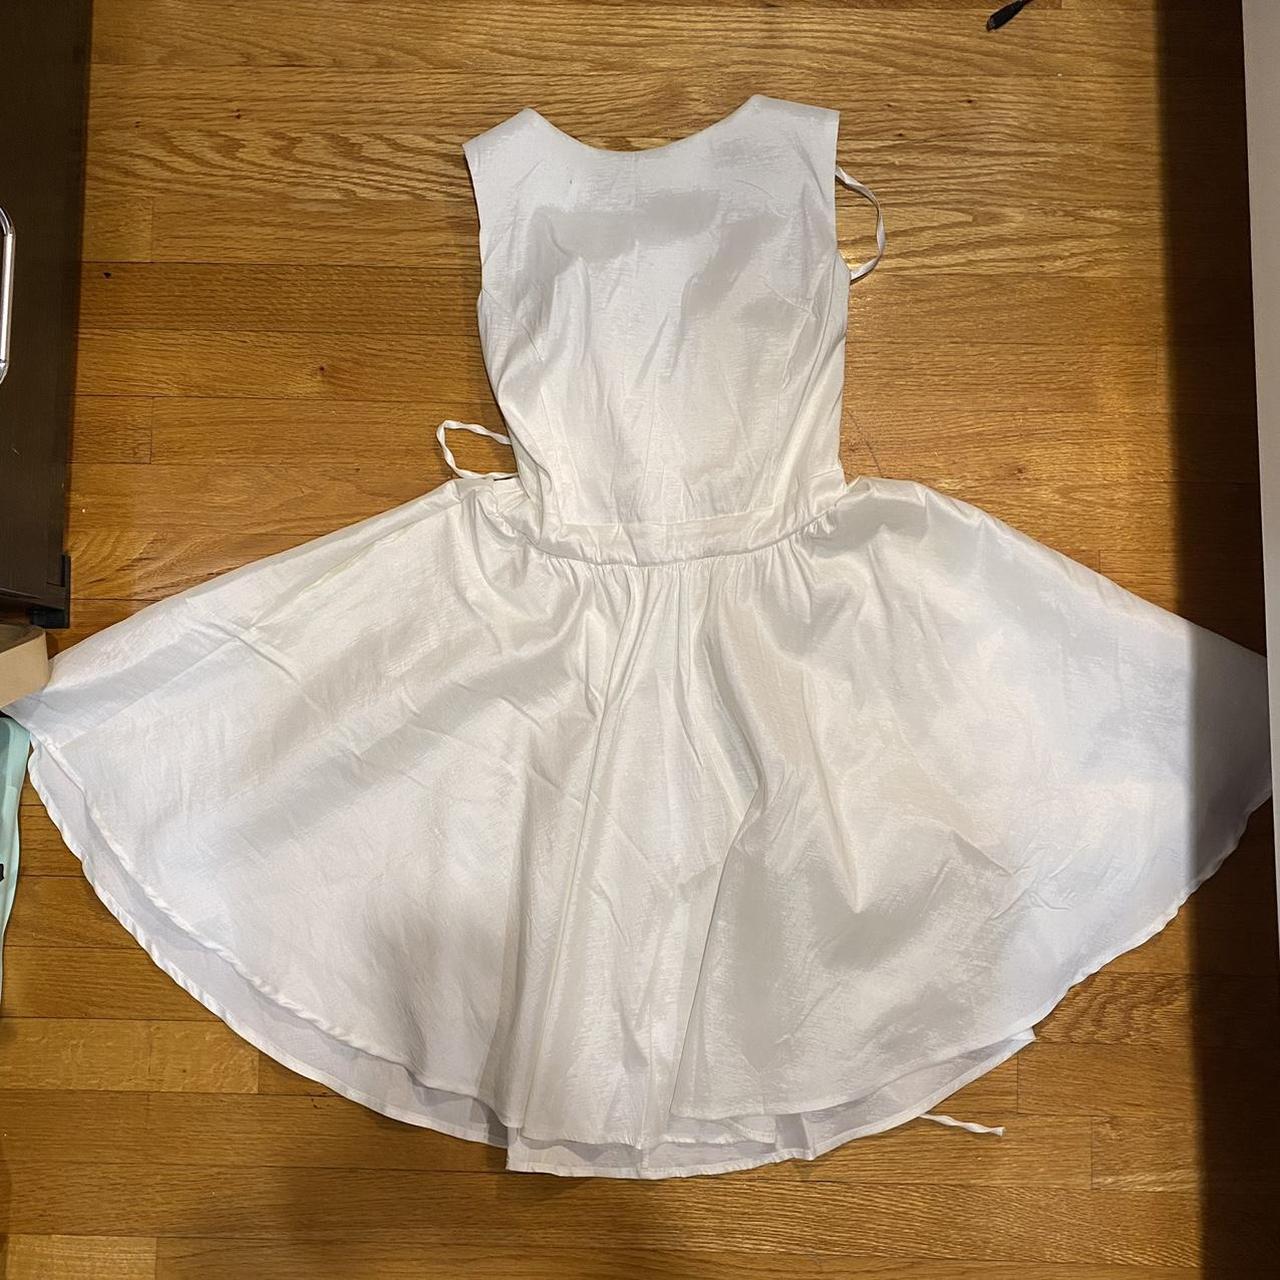 Windsor Women's White Dress | Depop